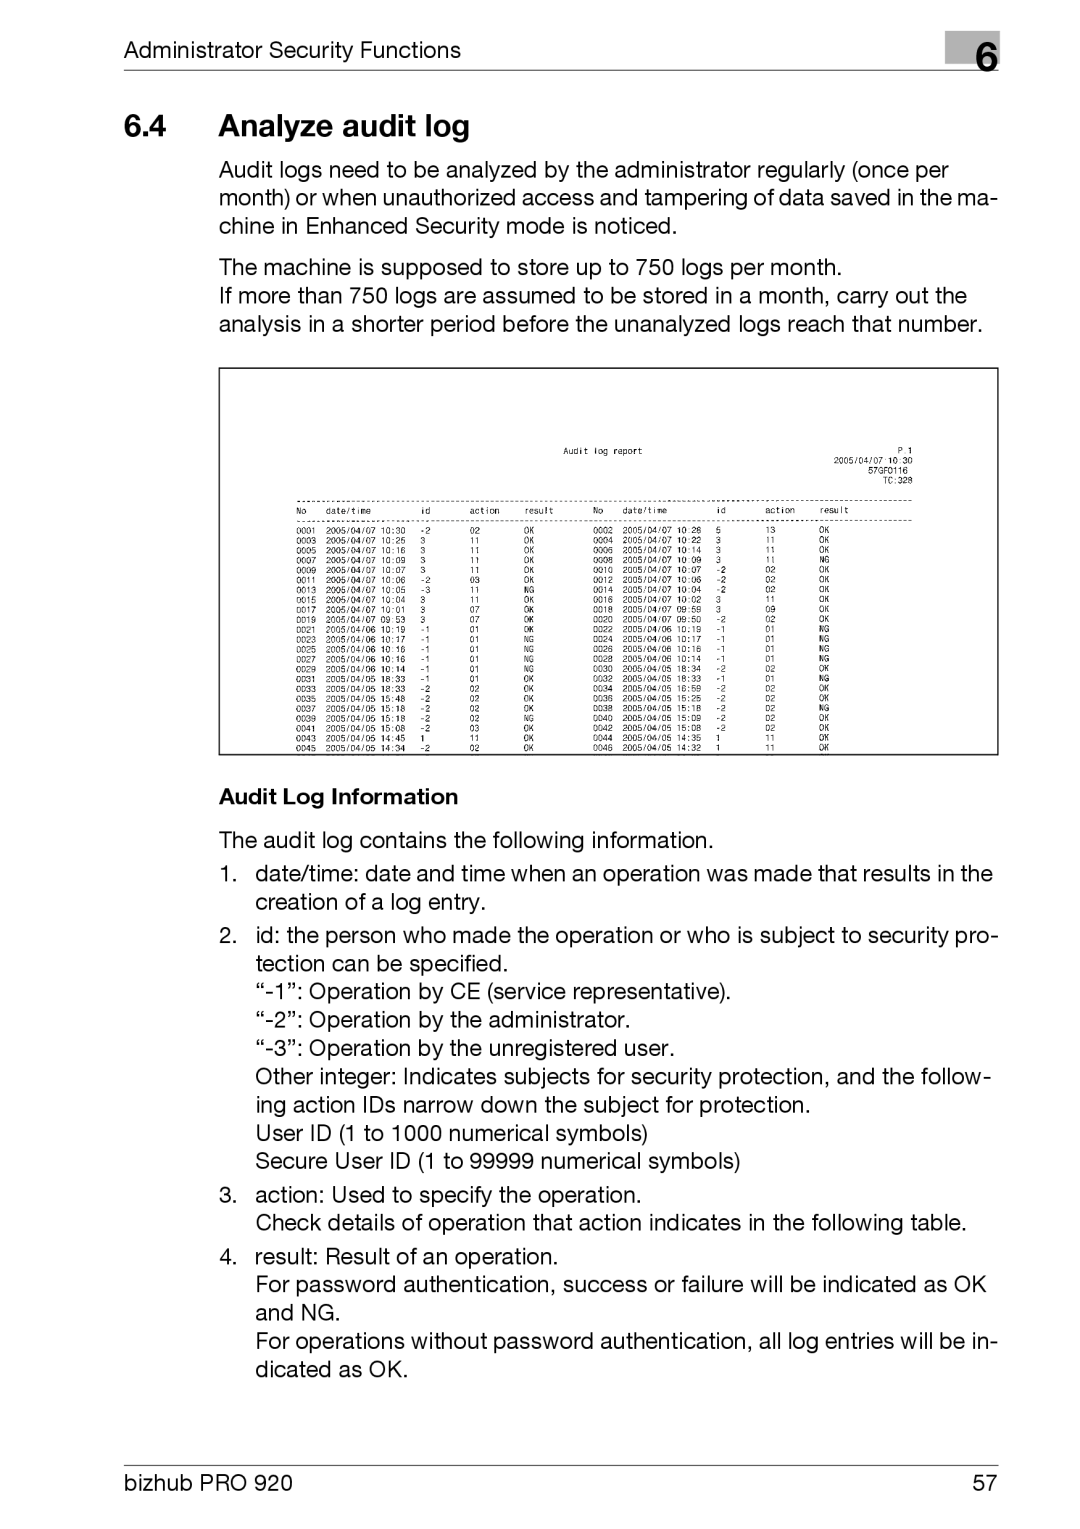 Konica Minolta 920 manual Analyze audit log, Audit Log Information 